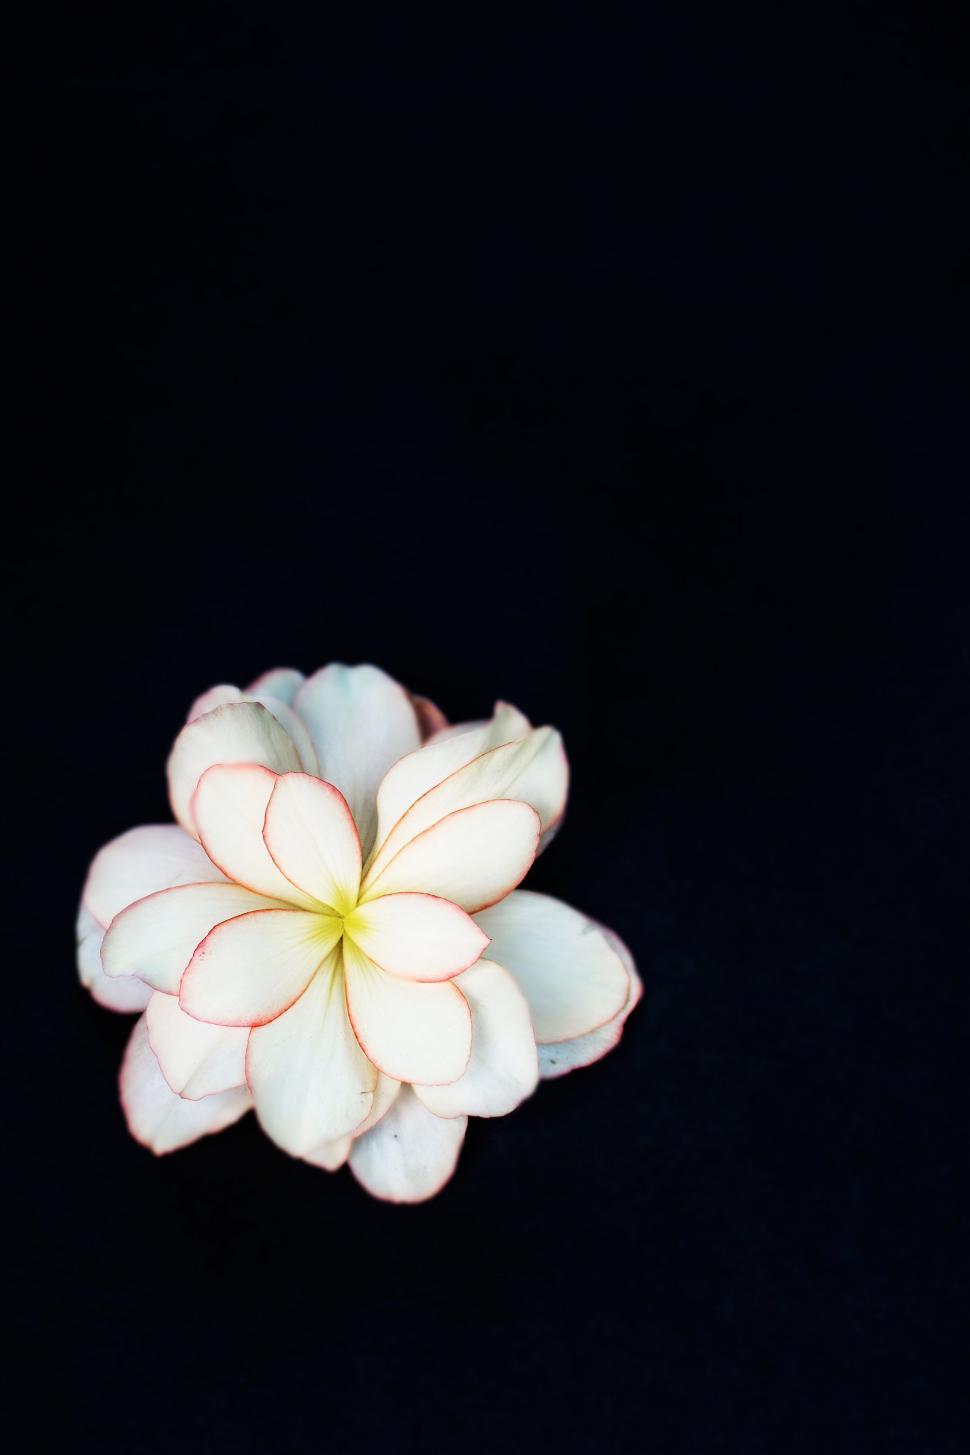 Free Image of White Flower on Black Background 